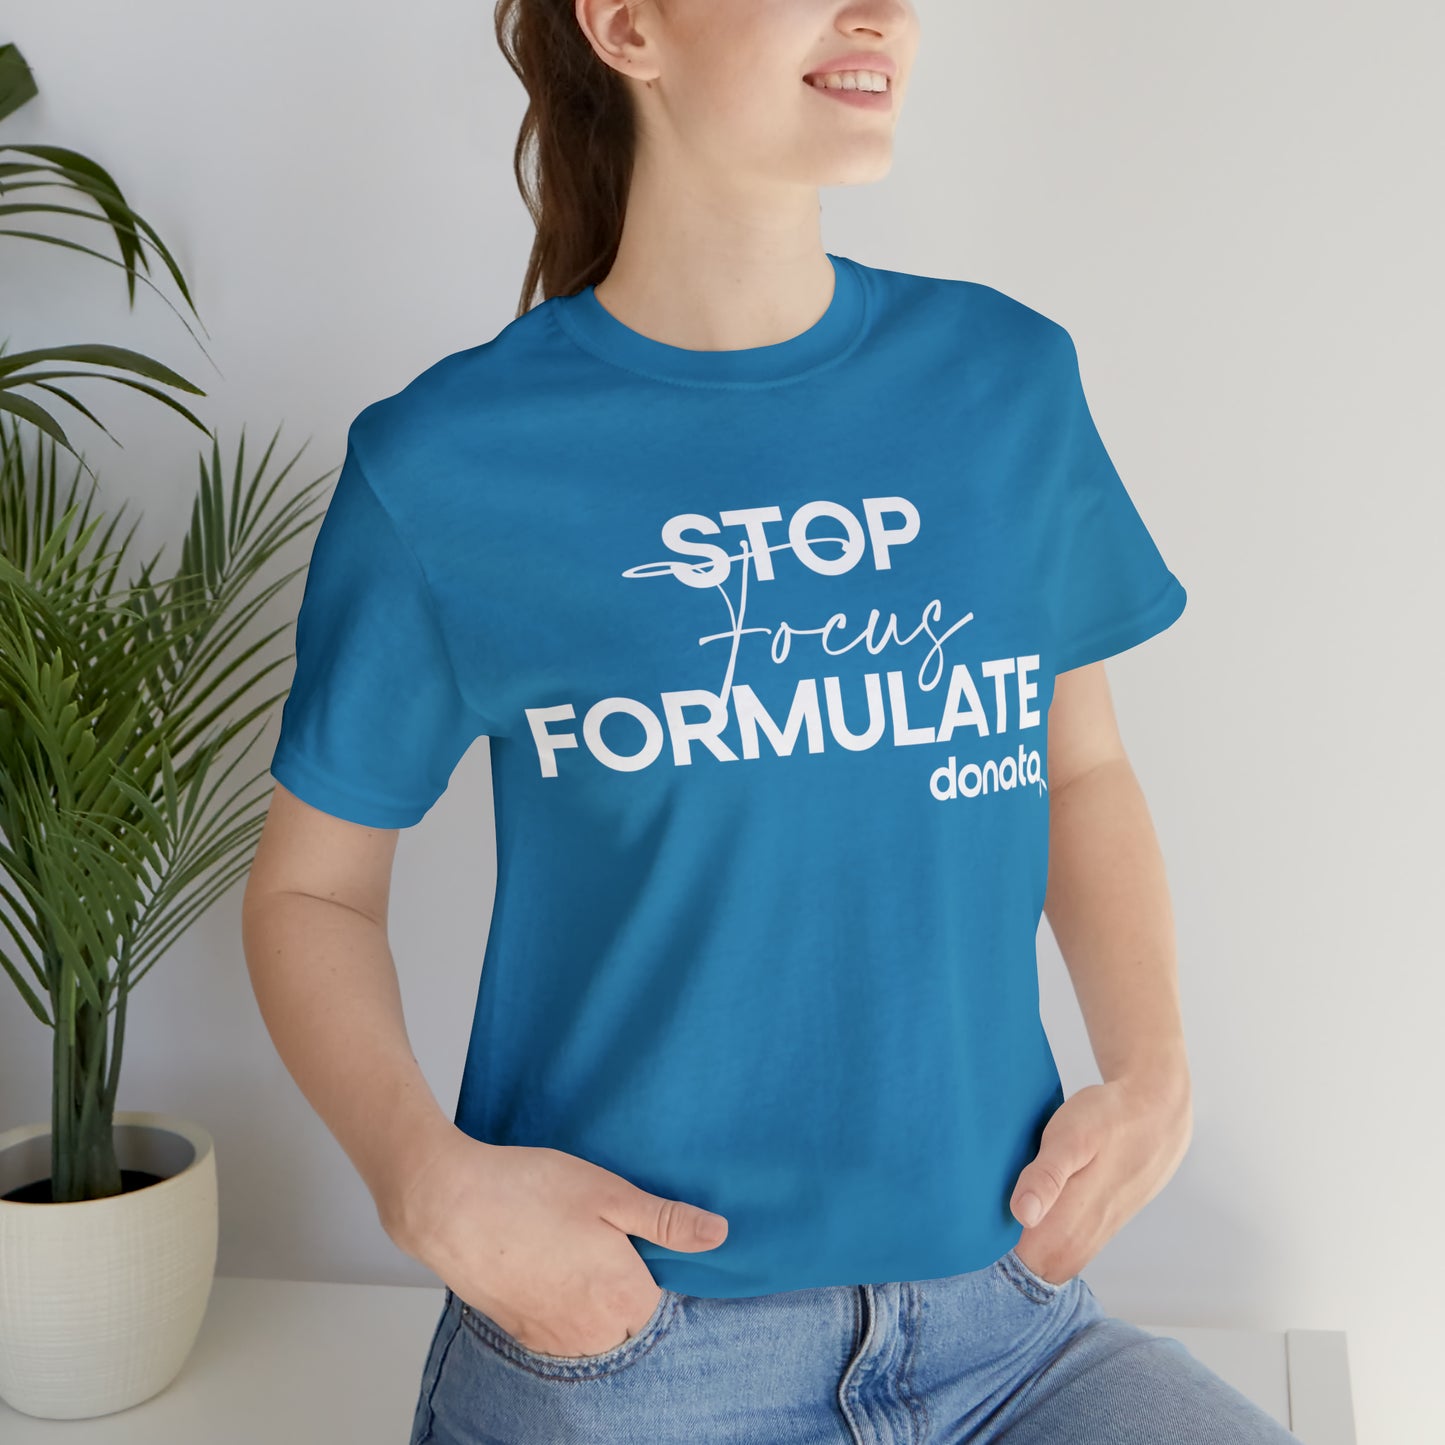 Stop • Focus • Formulate